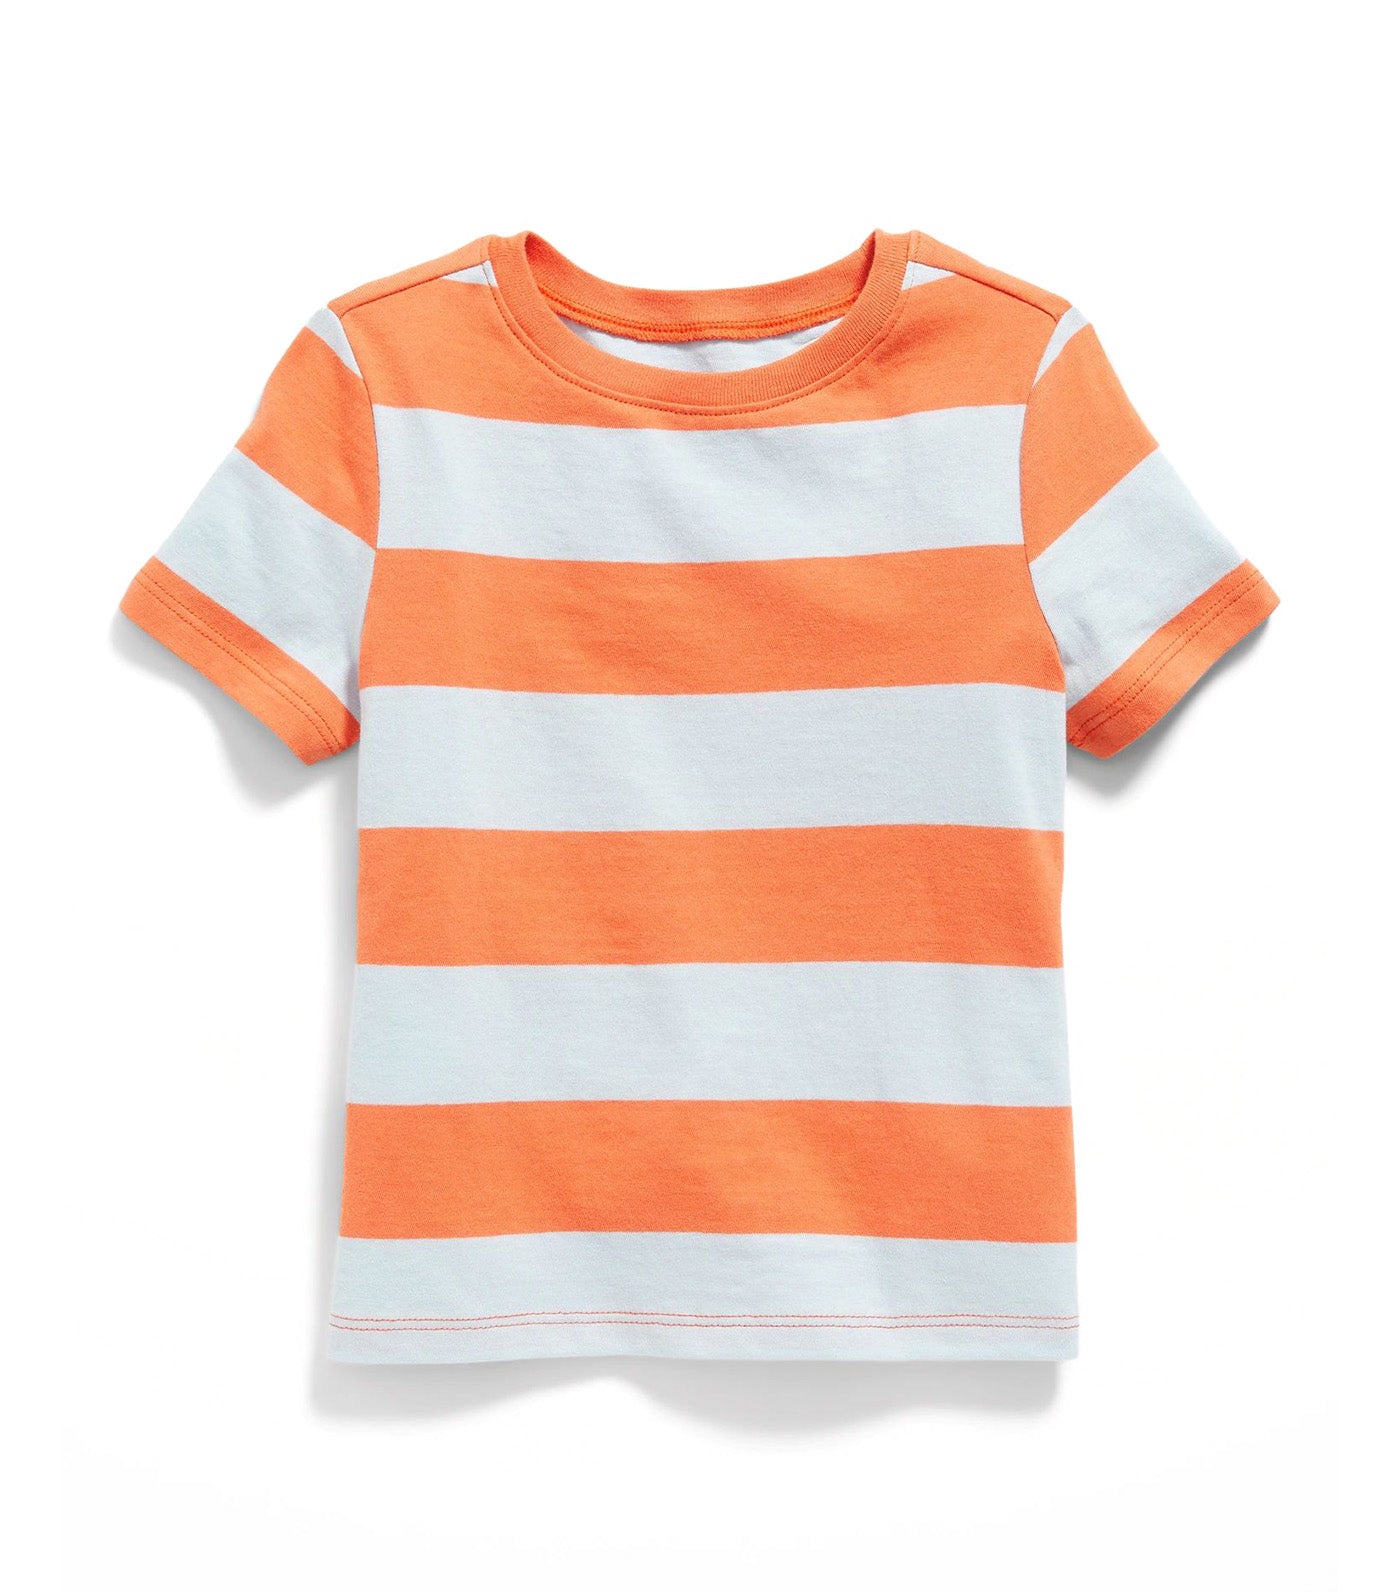 Unisex Printed T-Shirt for Toddler - Orange Stripe